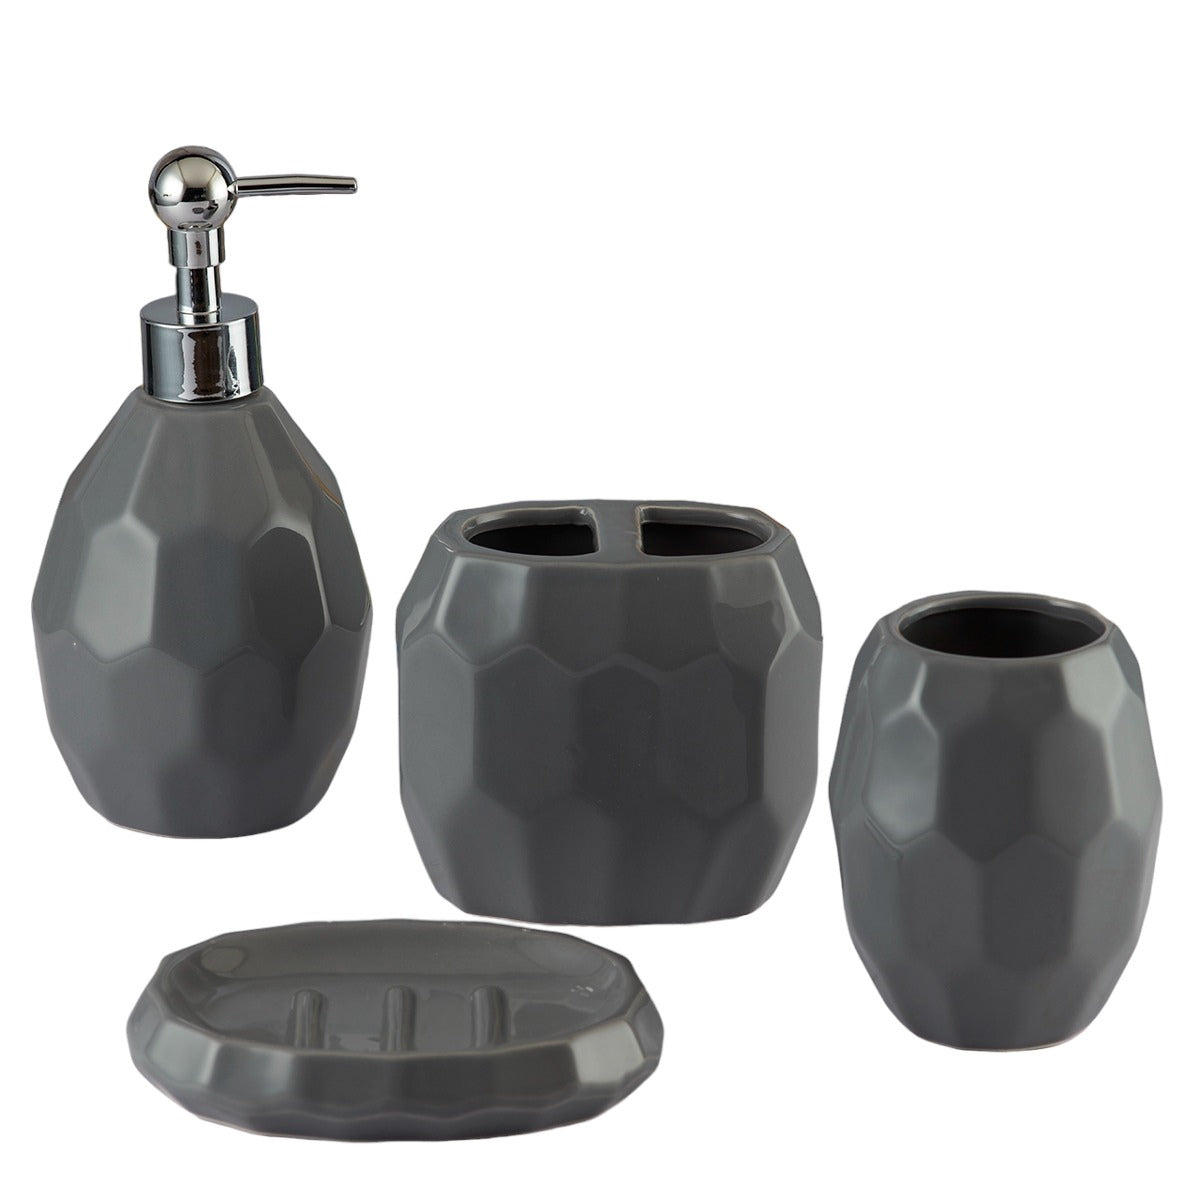 Ceramic Bathroom Accessories Set of 4 Bath Set with Soap Dispenser (8105)